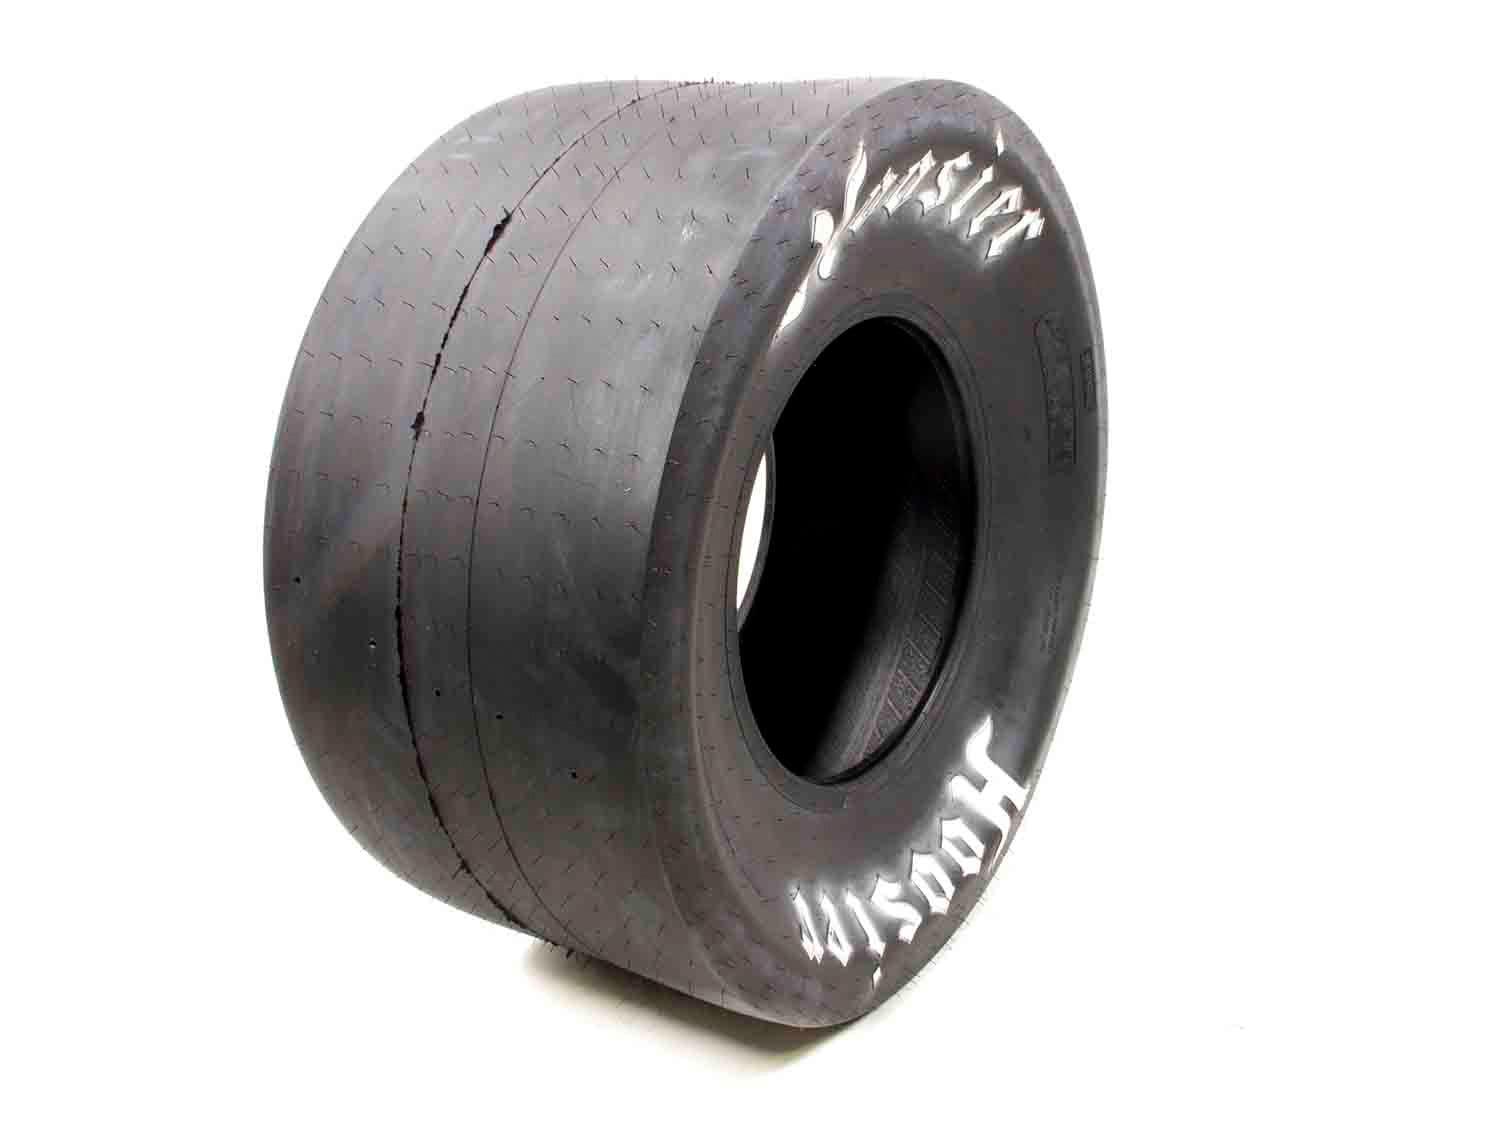 32.0/13-15 Drag Tire - Burlile Performance Products